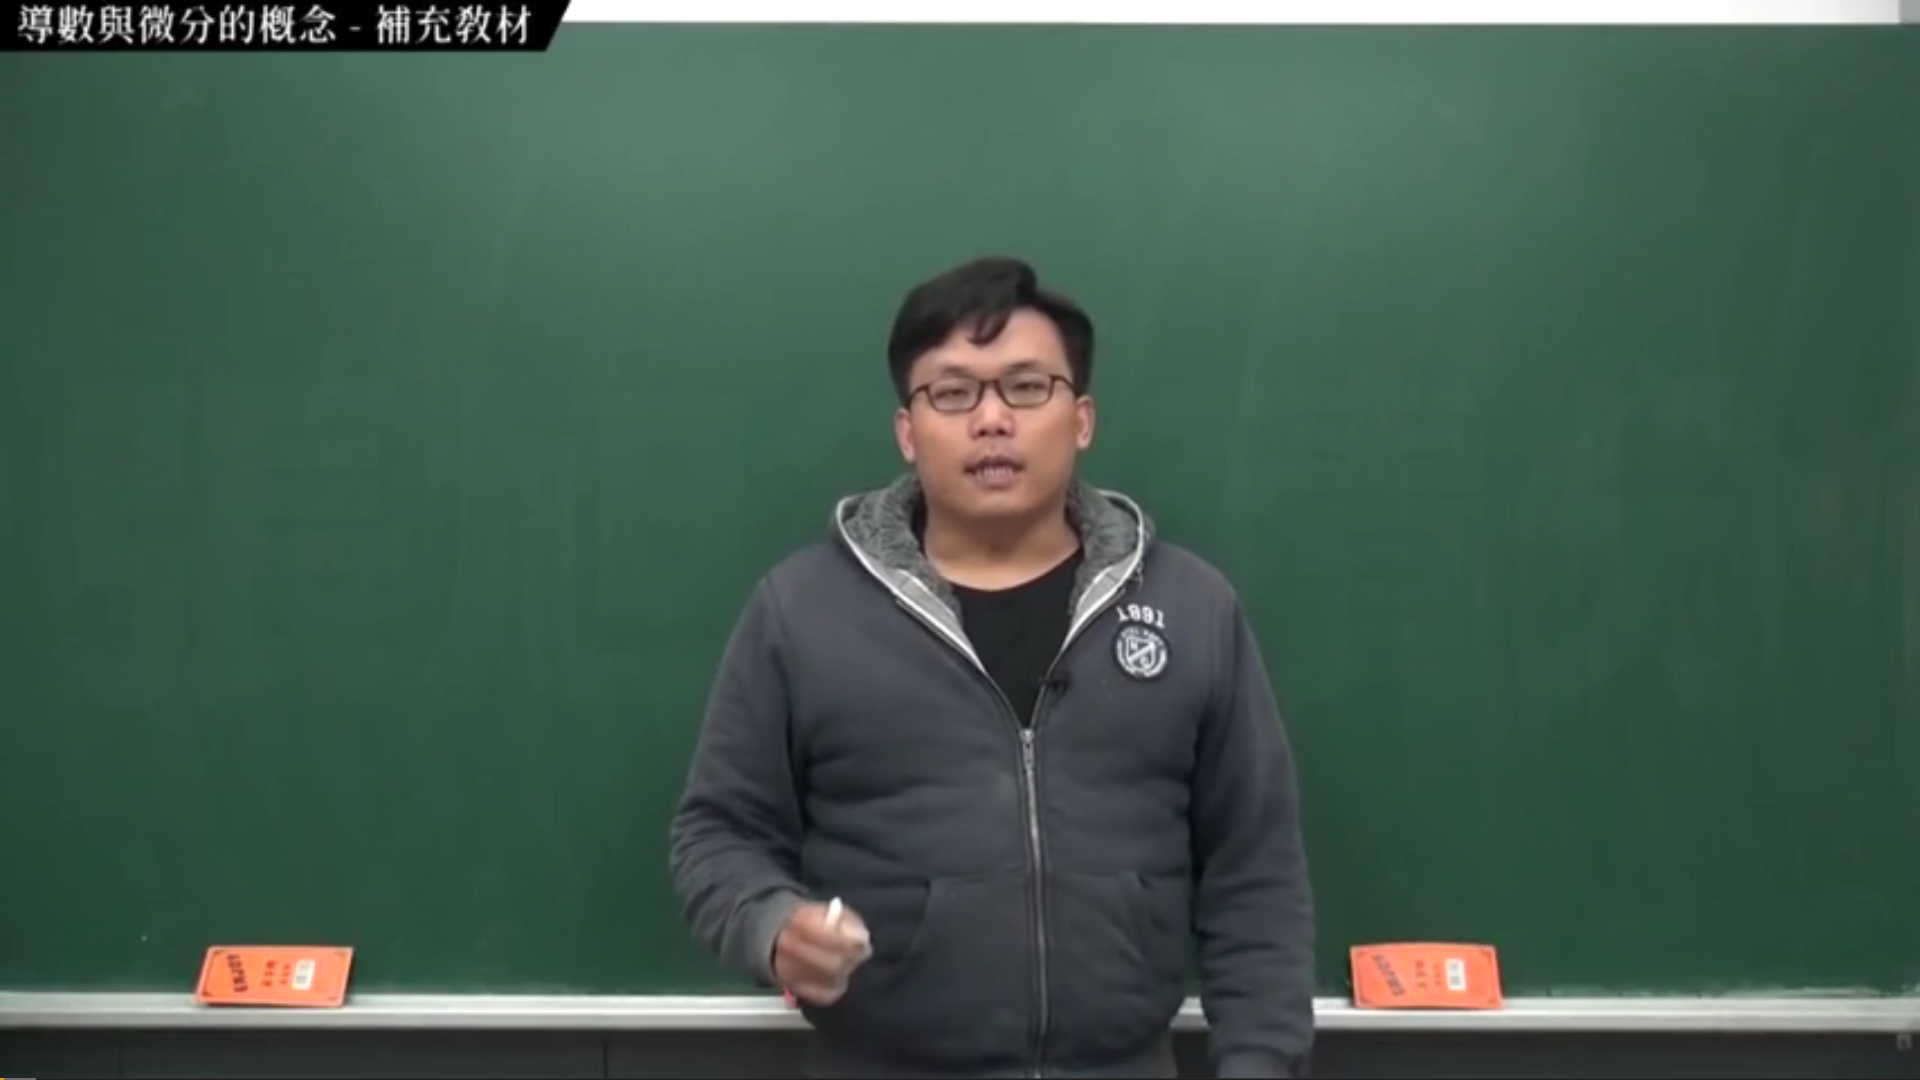 Chang Hsu, 34, better known as “changhsumath666, a Taiwanese math teacher who uses publishes Calculus lectures to Pornhub. // [重啟][真・pronhub 最大華人微積分教學頻道]微分篇重點一：導數與微分的概念｜補充教材｜數學老師張旭 - Sputnik International, 1920, 04.11.2021